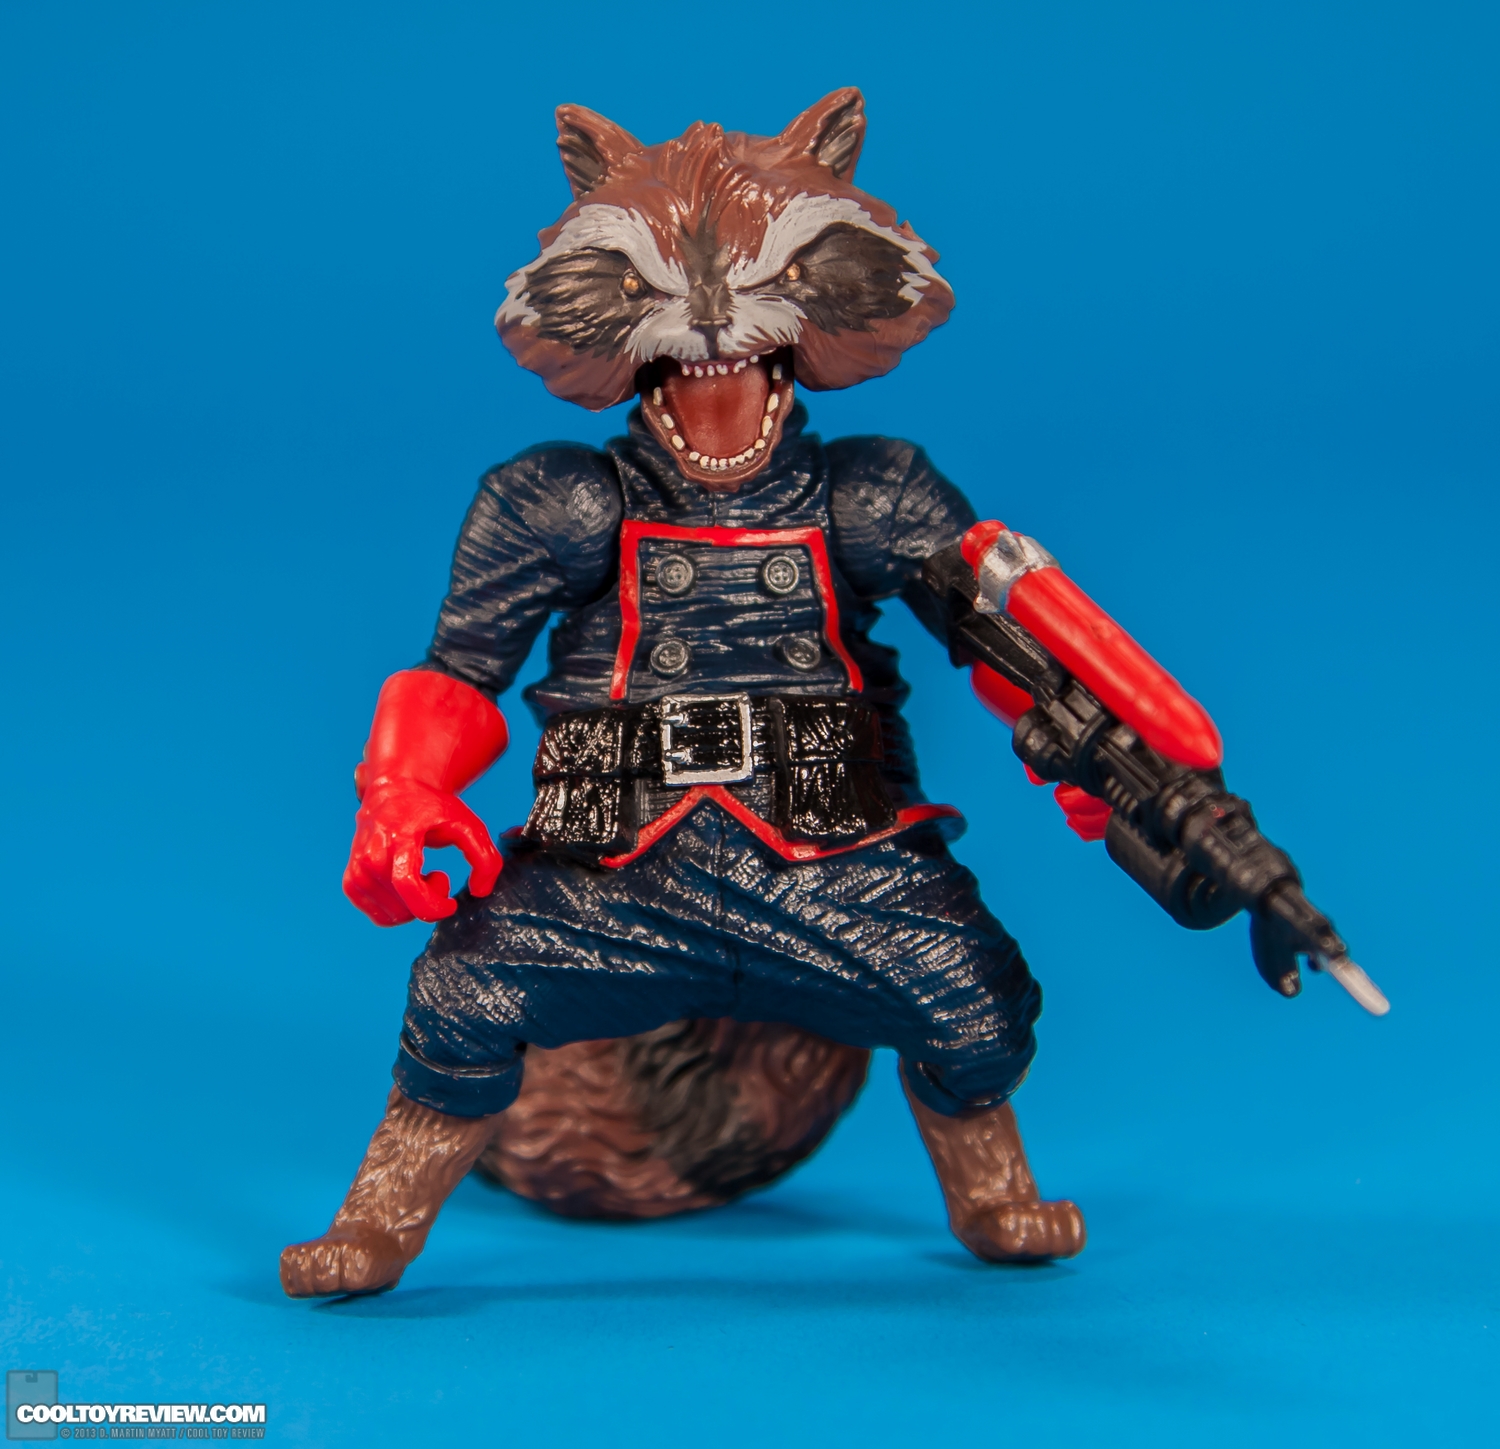 Marvel-Legends-Rocket-Raccoon-Series-Build-A-Figure-Hasbro-001.jpg